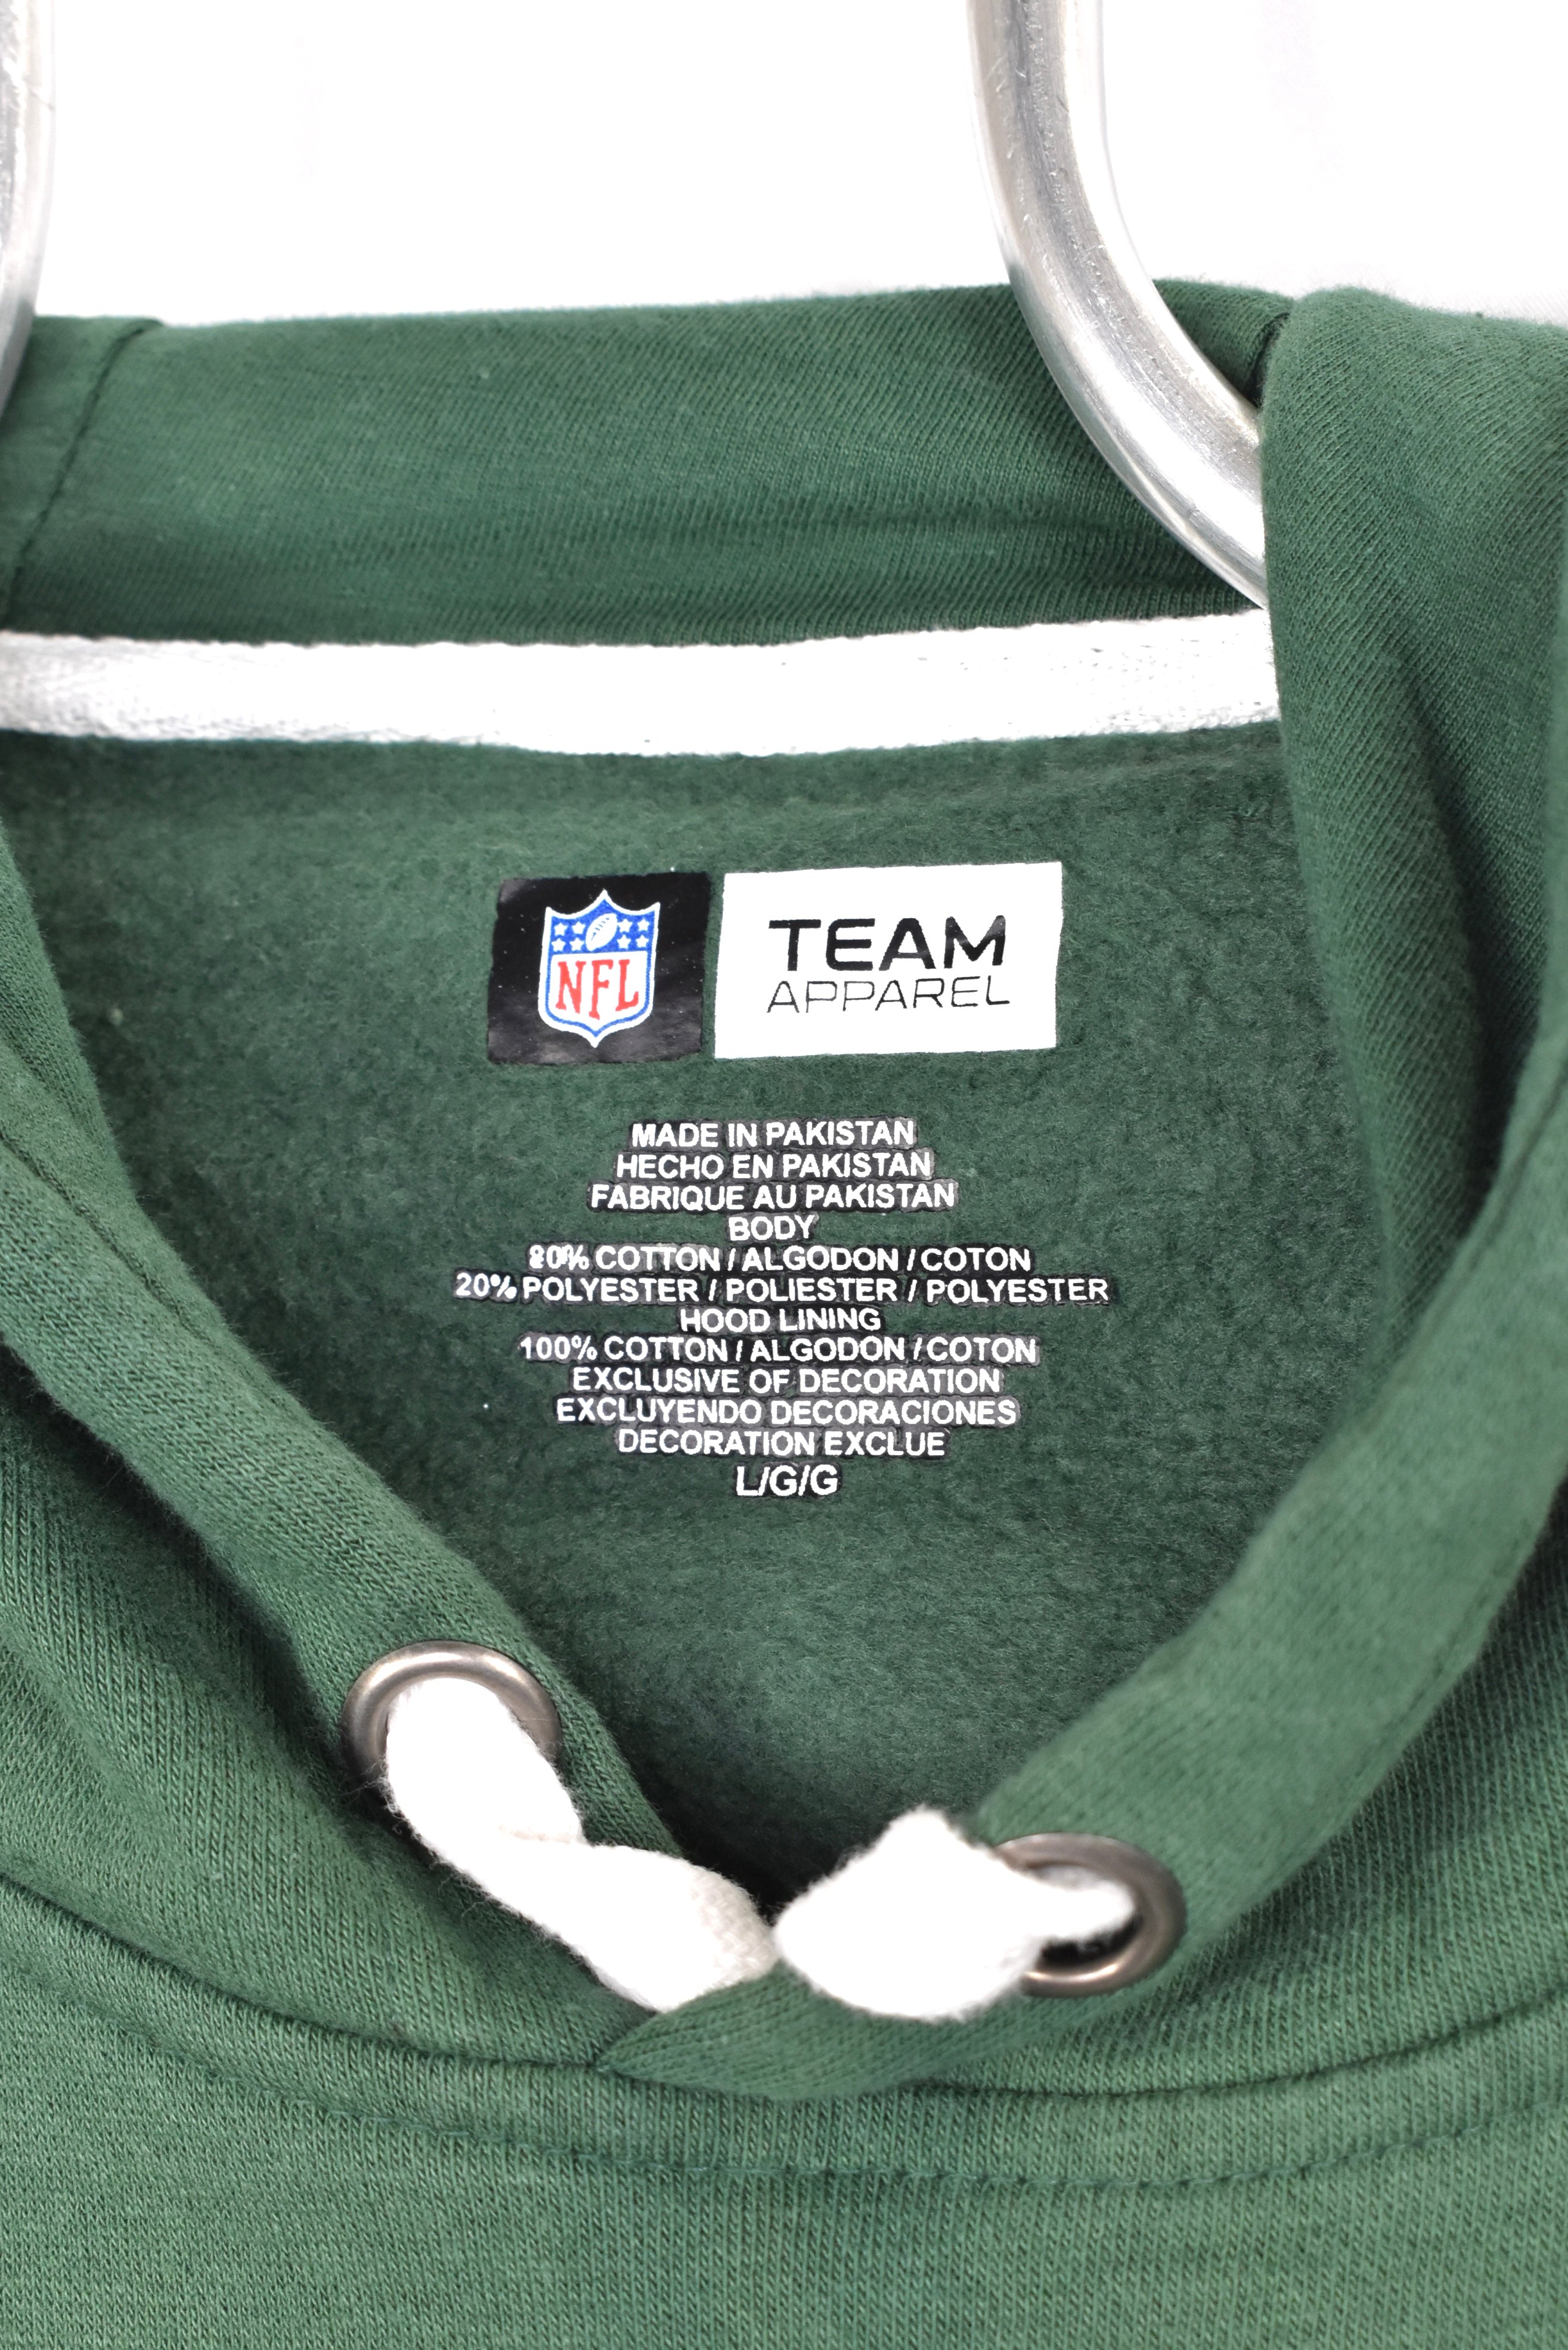 Vintage Green Bay Packers hoodie, NFL green embroidered sweatshirt - AU Large PRO SPORT